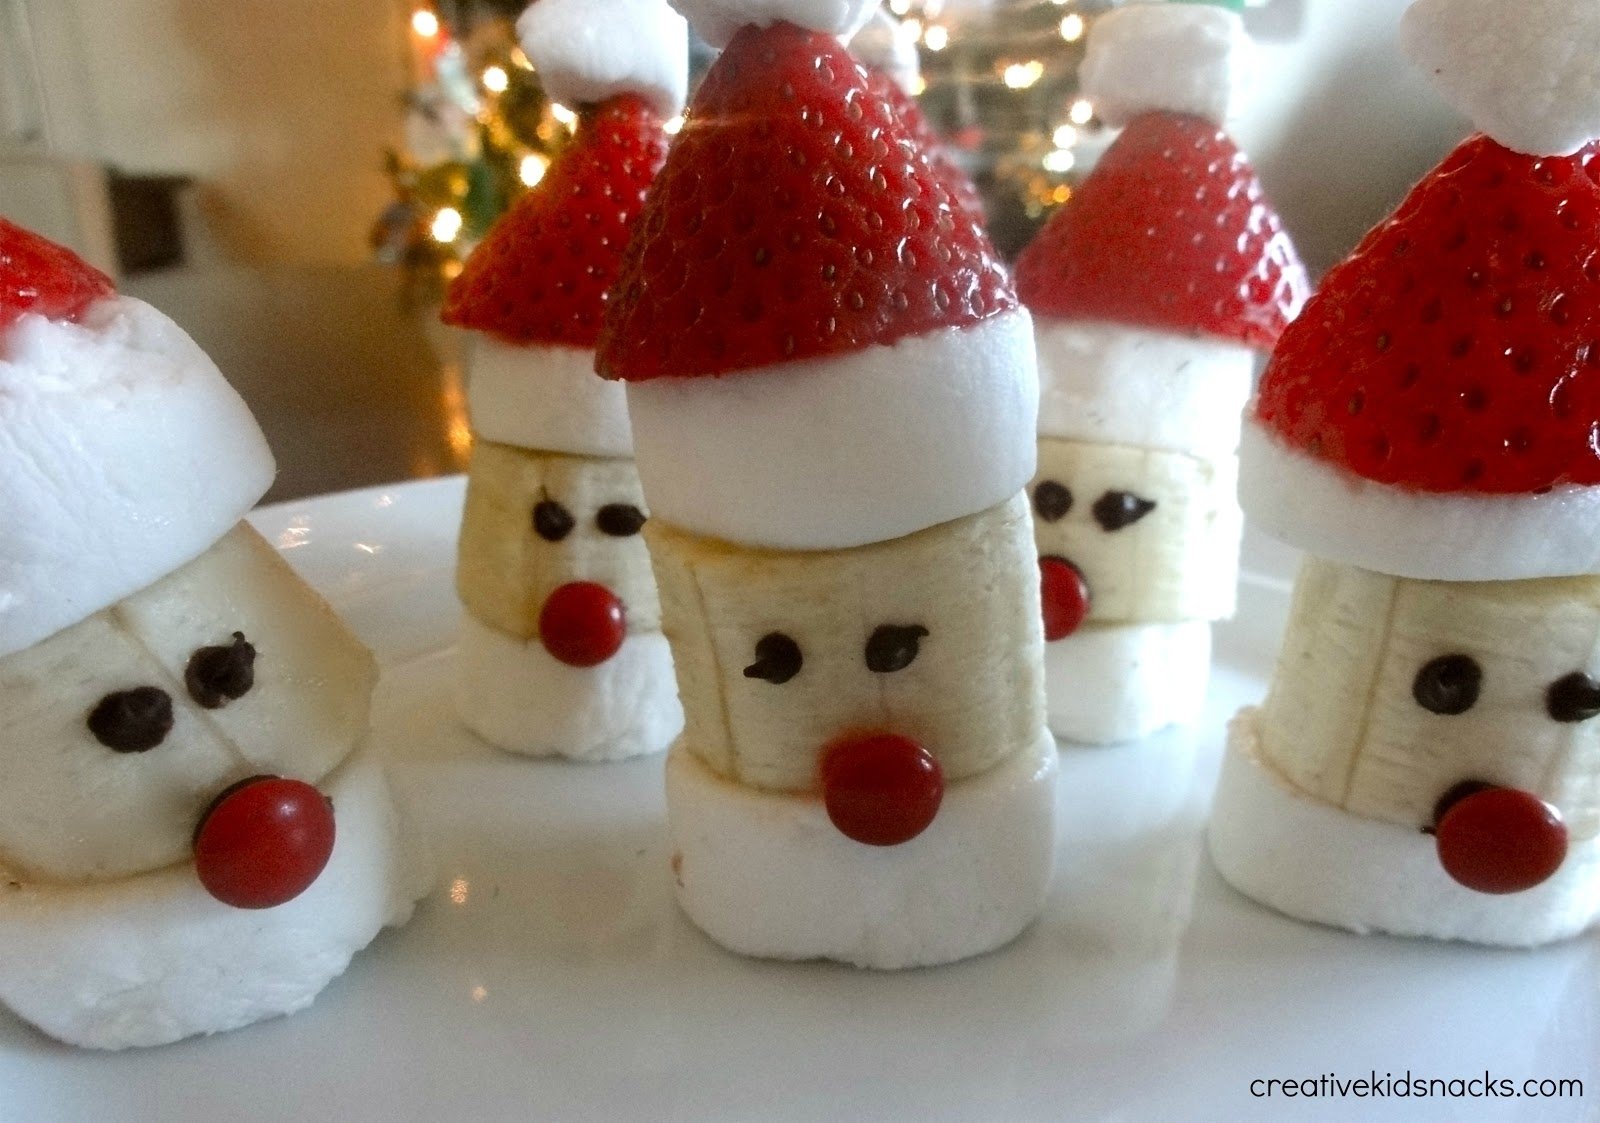 10 Beautiful Christmas Food Ideas For Kids healthy christmas food ideas for kids creative kids snacks 1 2022